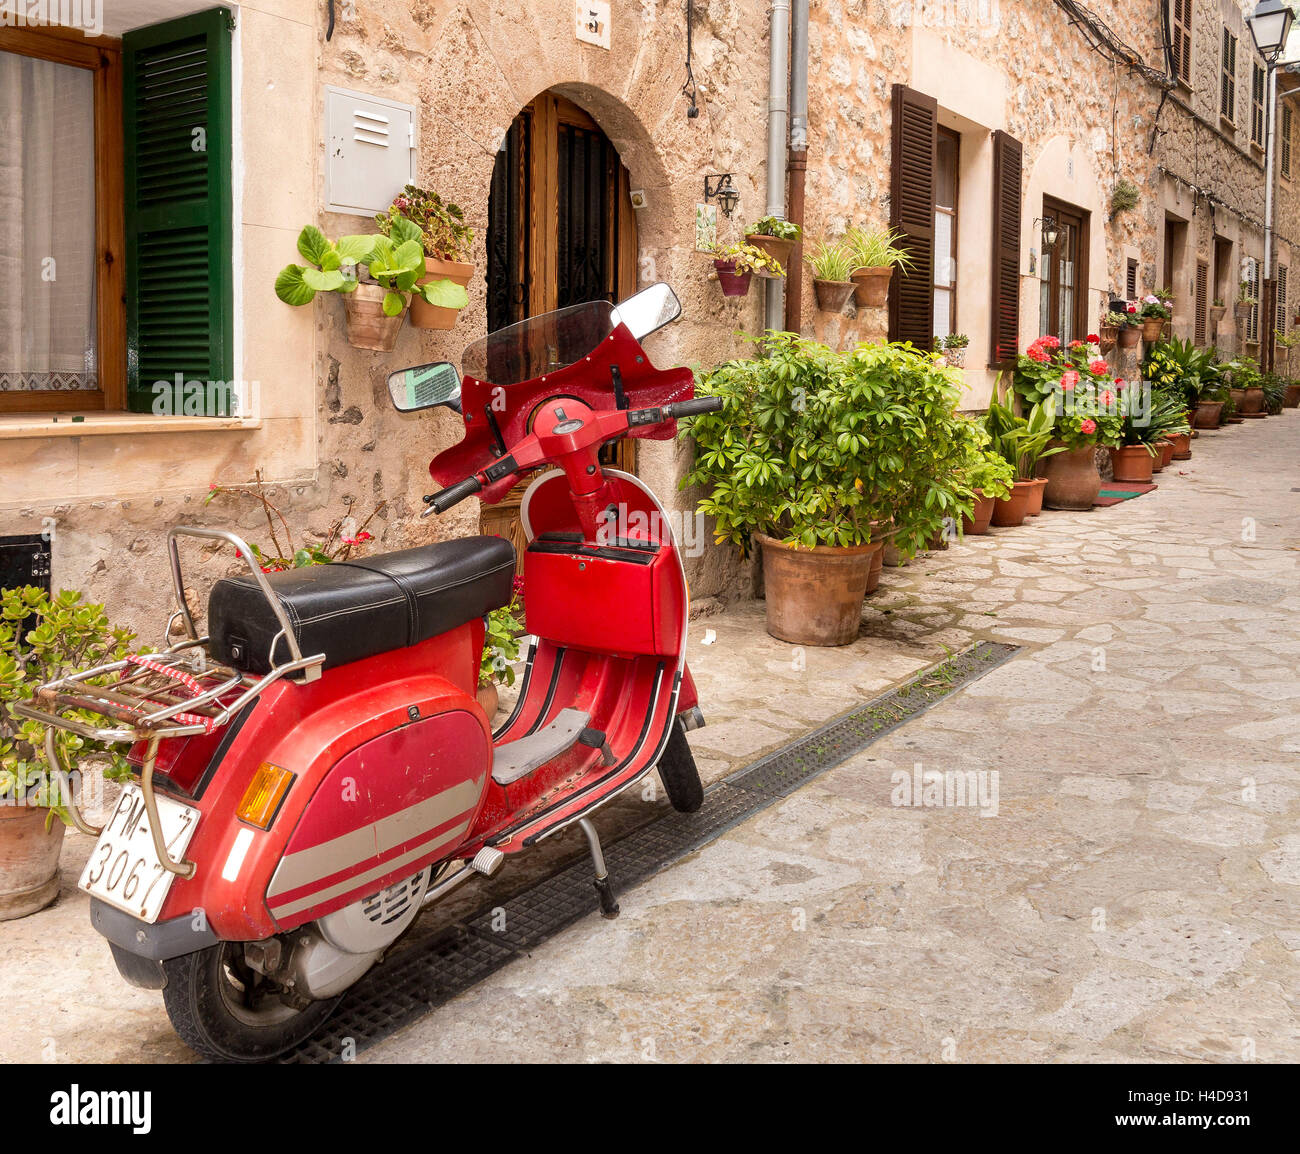 A motor scooter in a lane, Valldemossa, island Majorca, the Balearic Islands, Spain, Europe Stock Photo